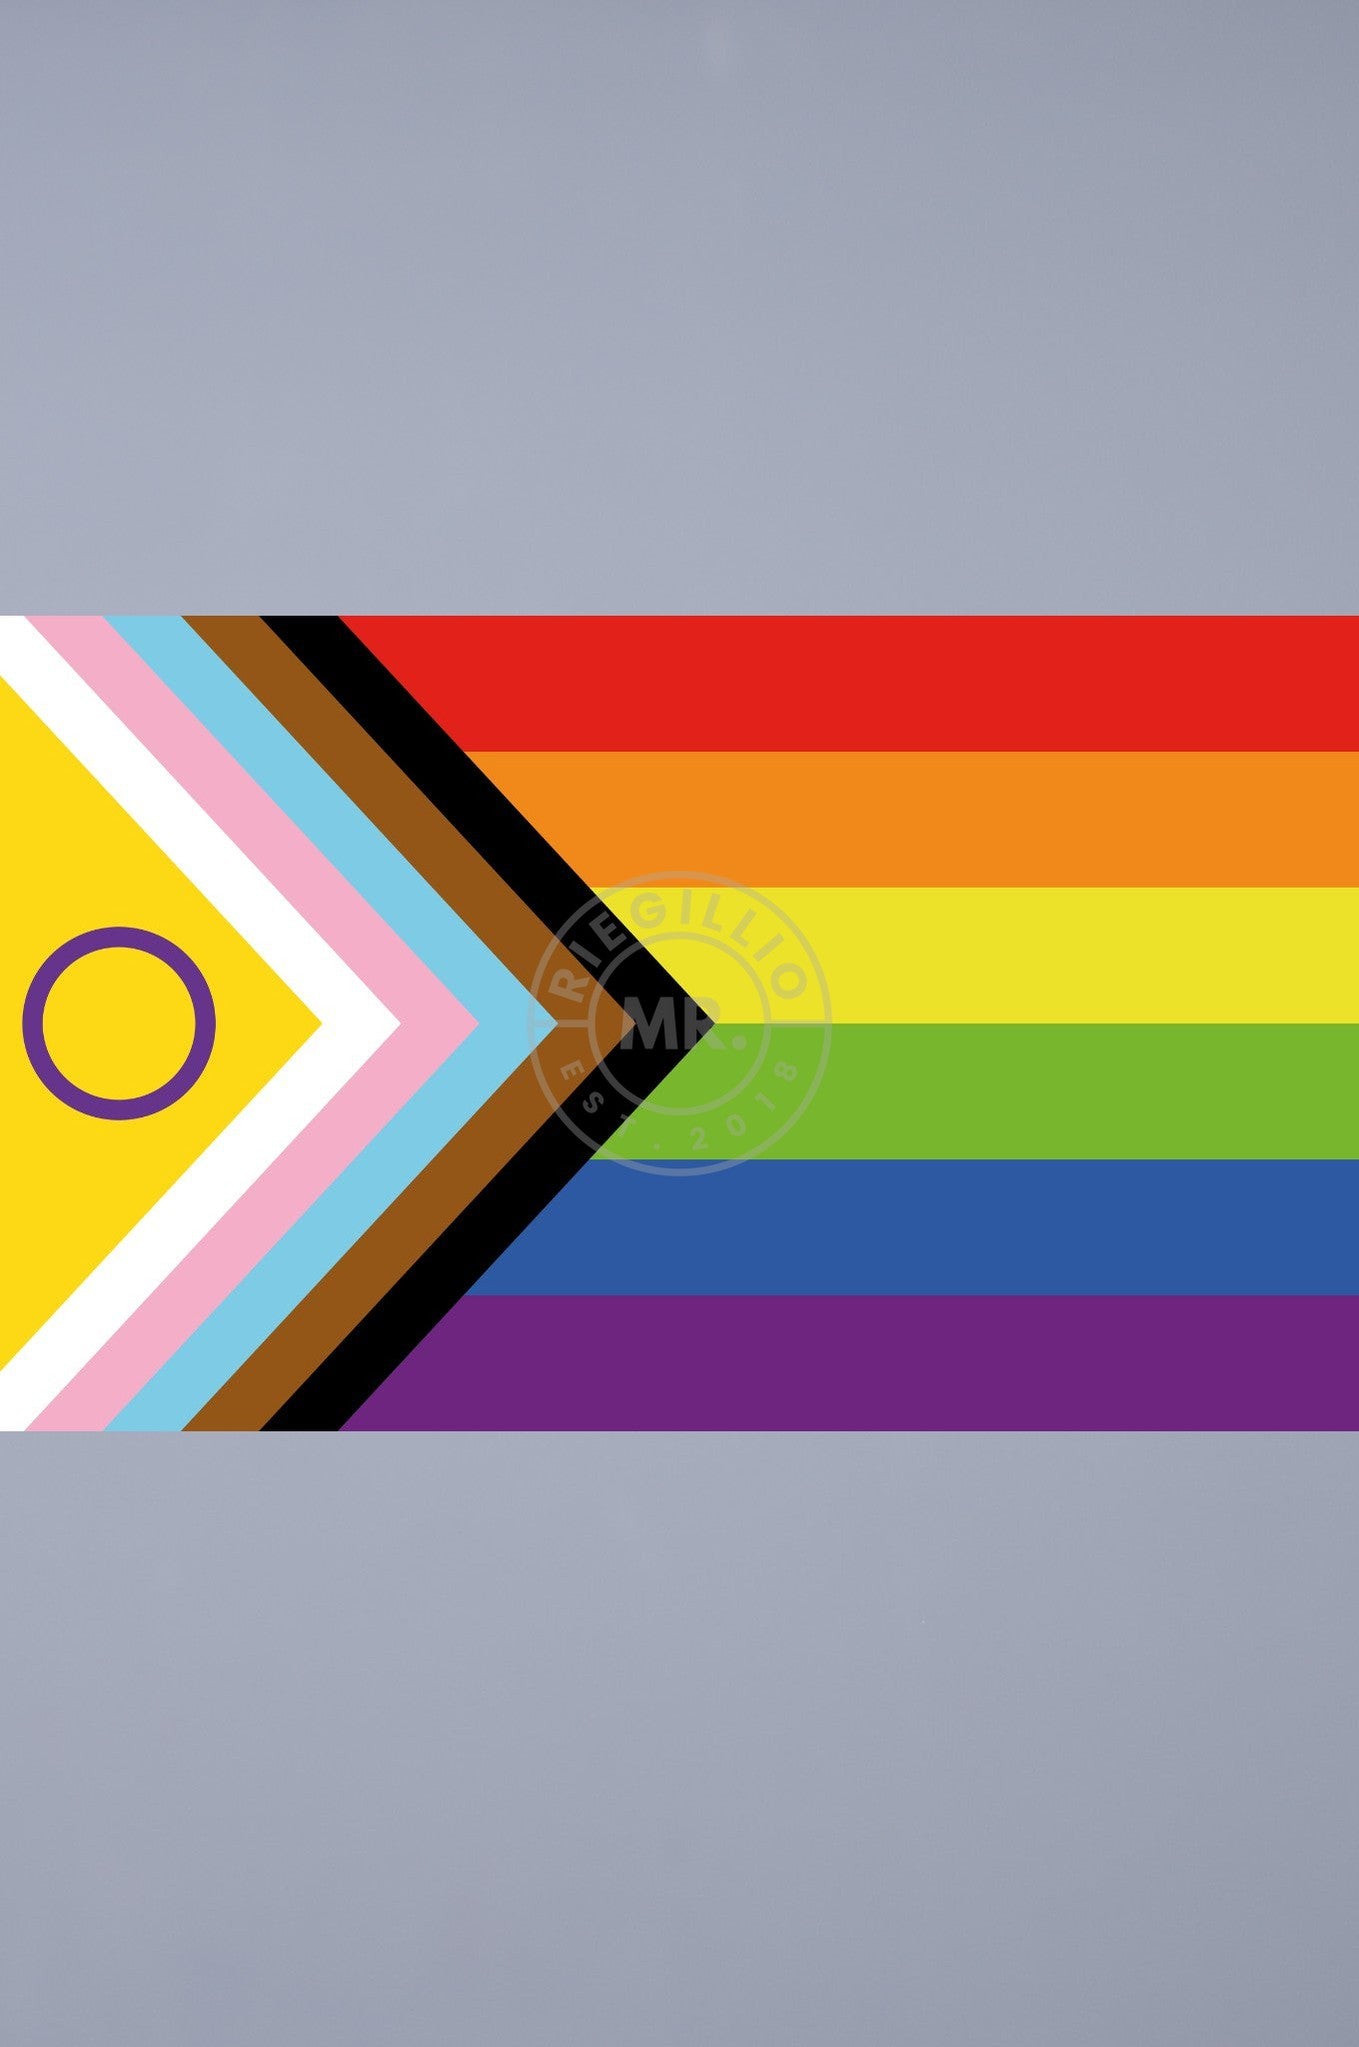 Pride Flag - Intersex-Inclusive - 60 x 100 cm at MR. Riegillio